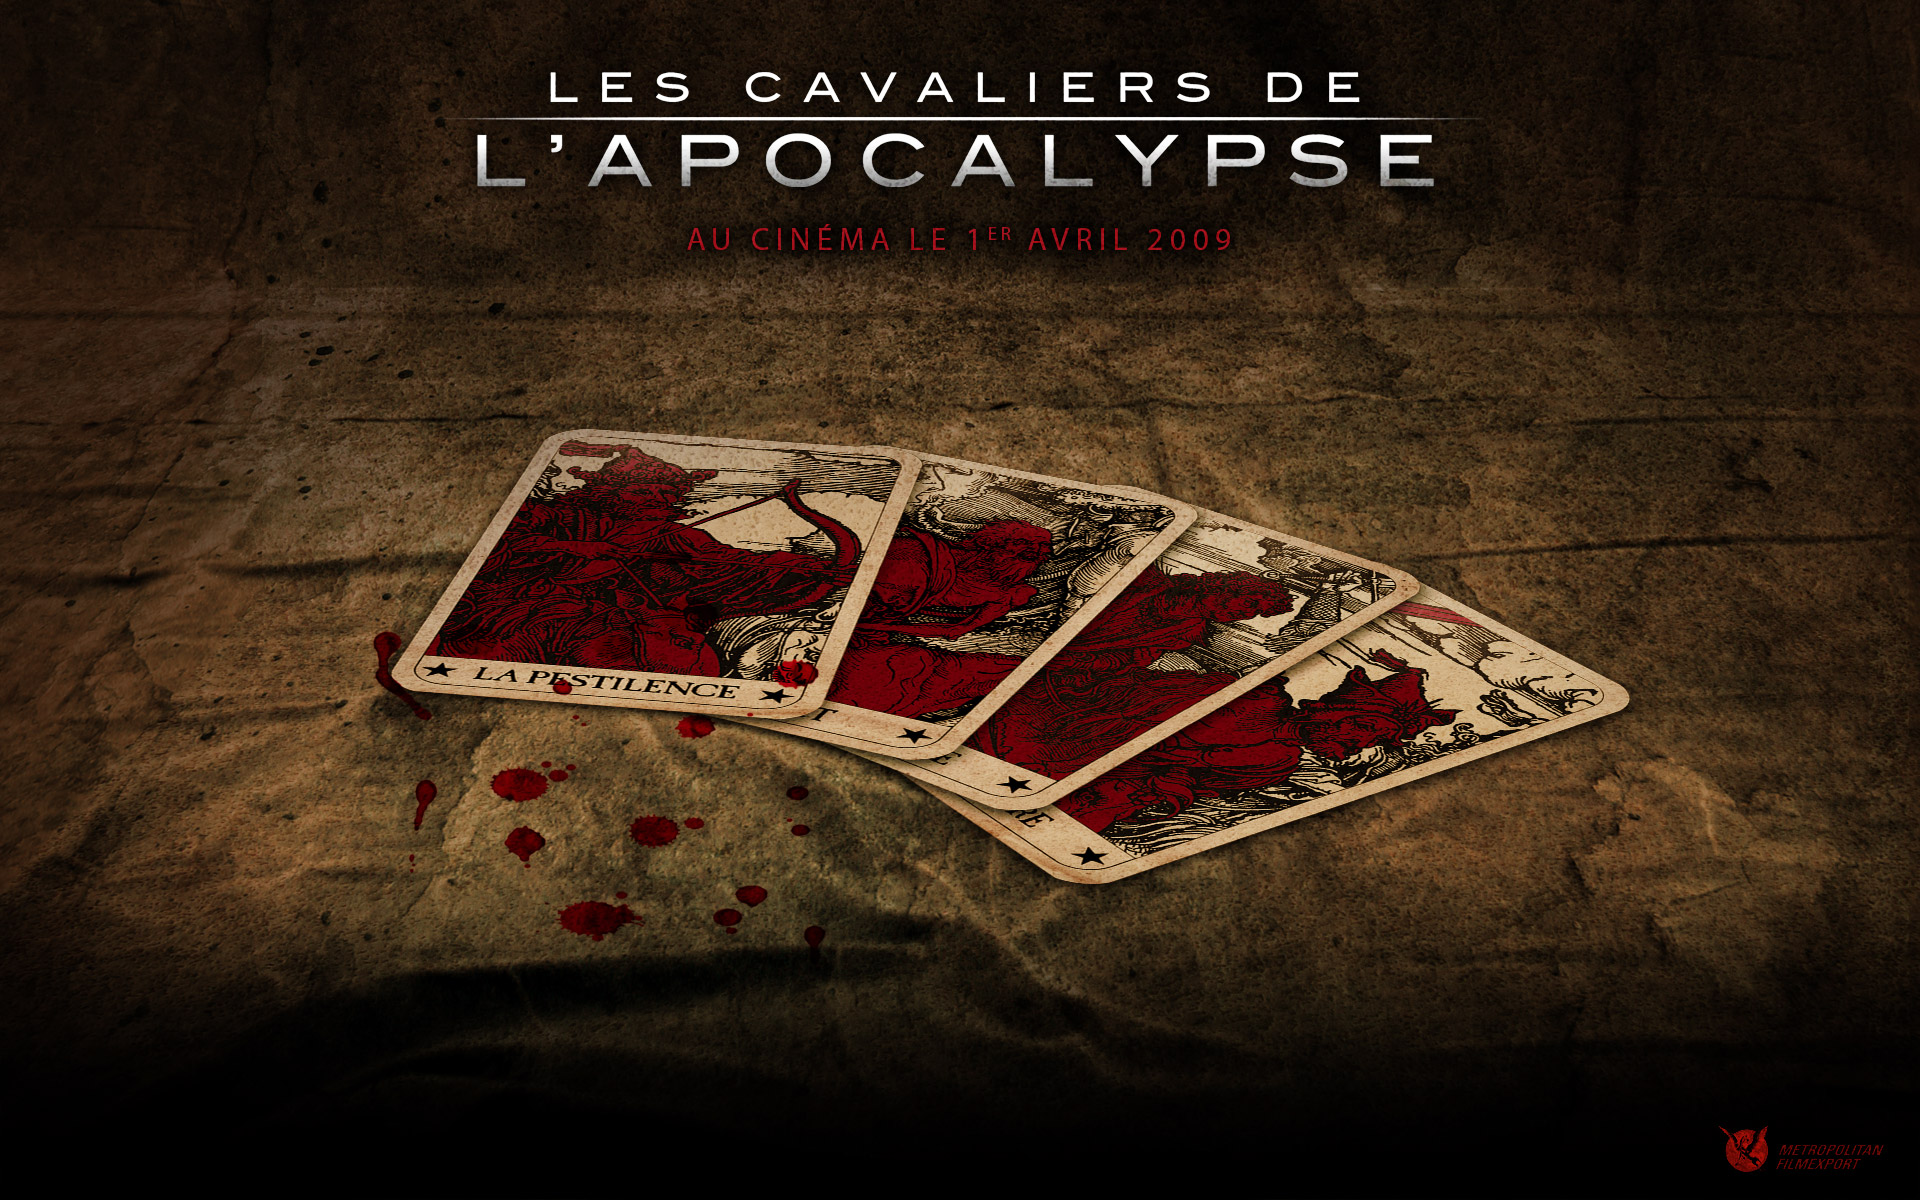 Les_cavaliers_de_l_apocalypse_02_1920x1200.jpg